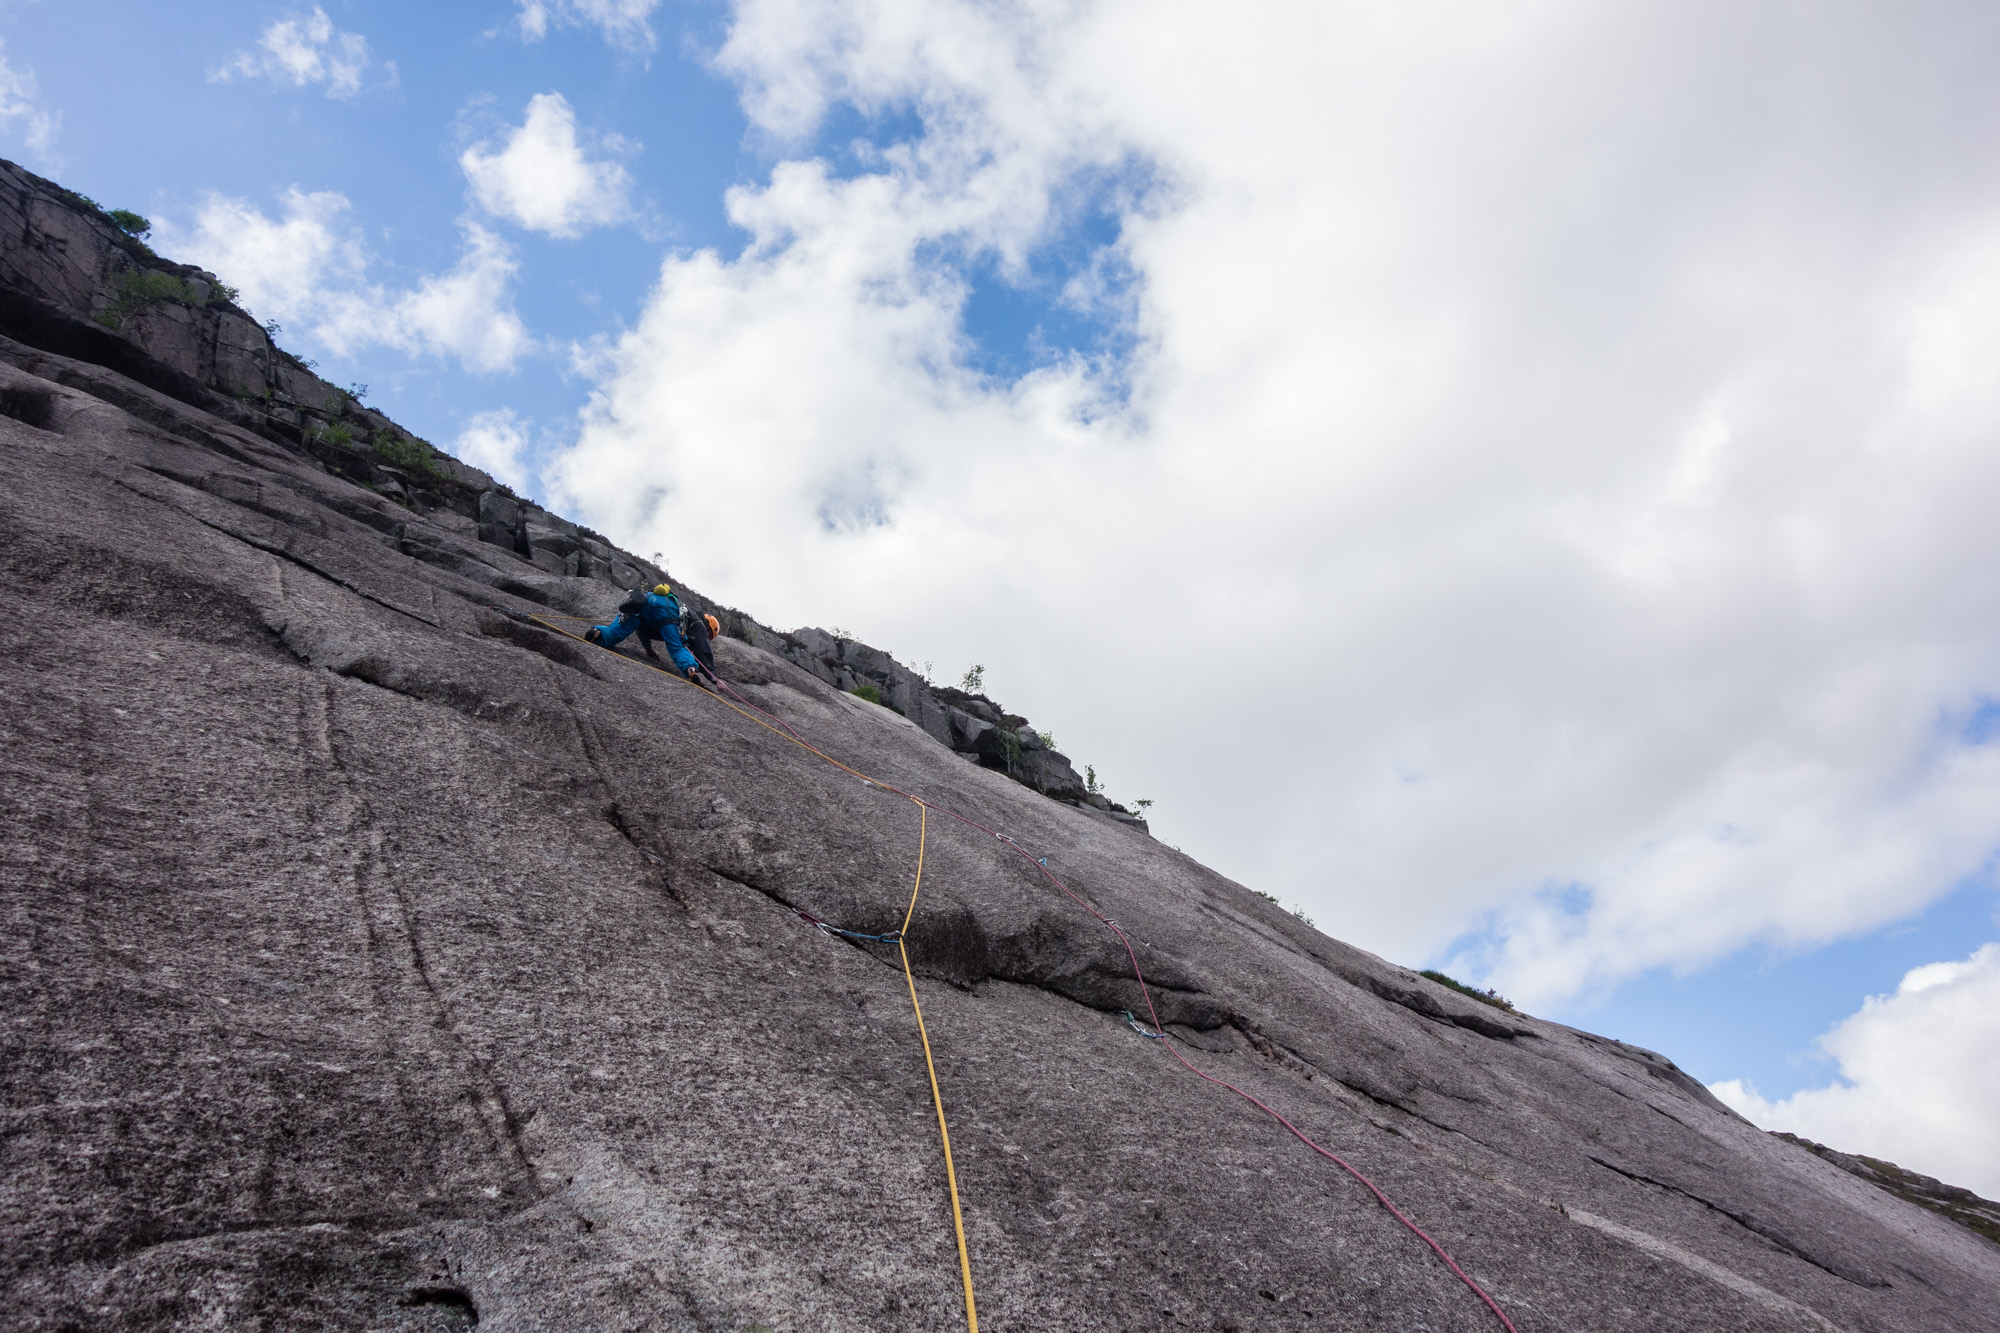 scottish summer rock climbing on the pause etive slabs